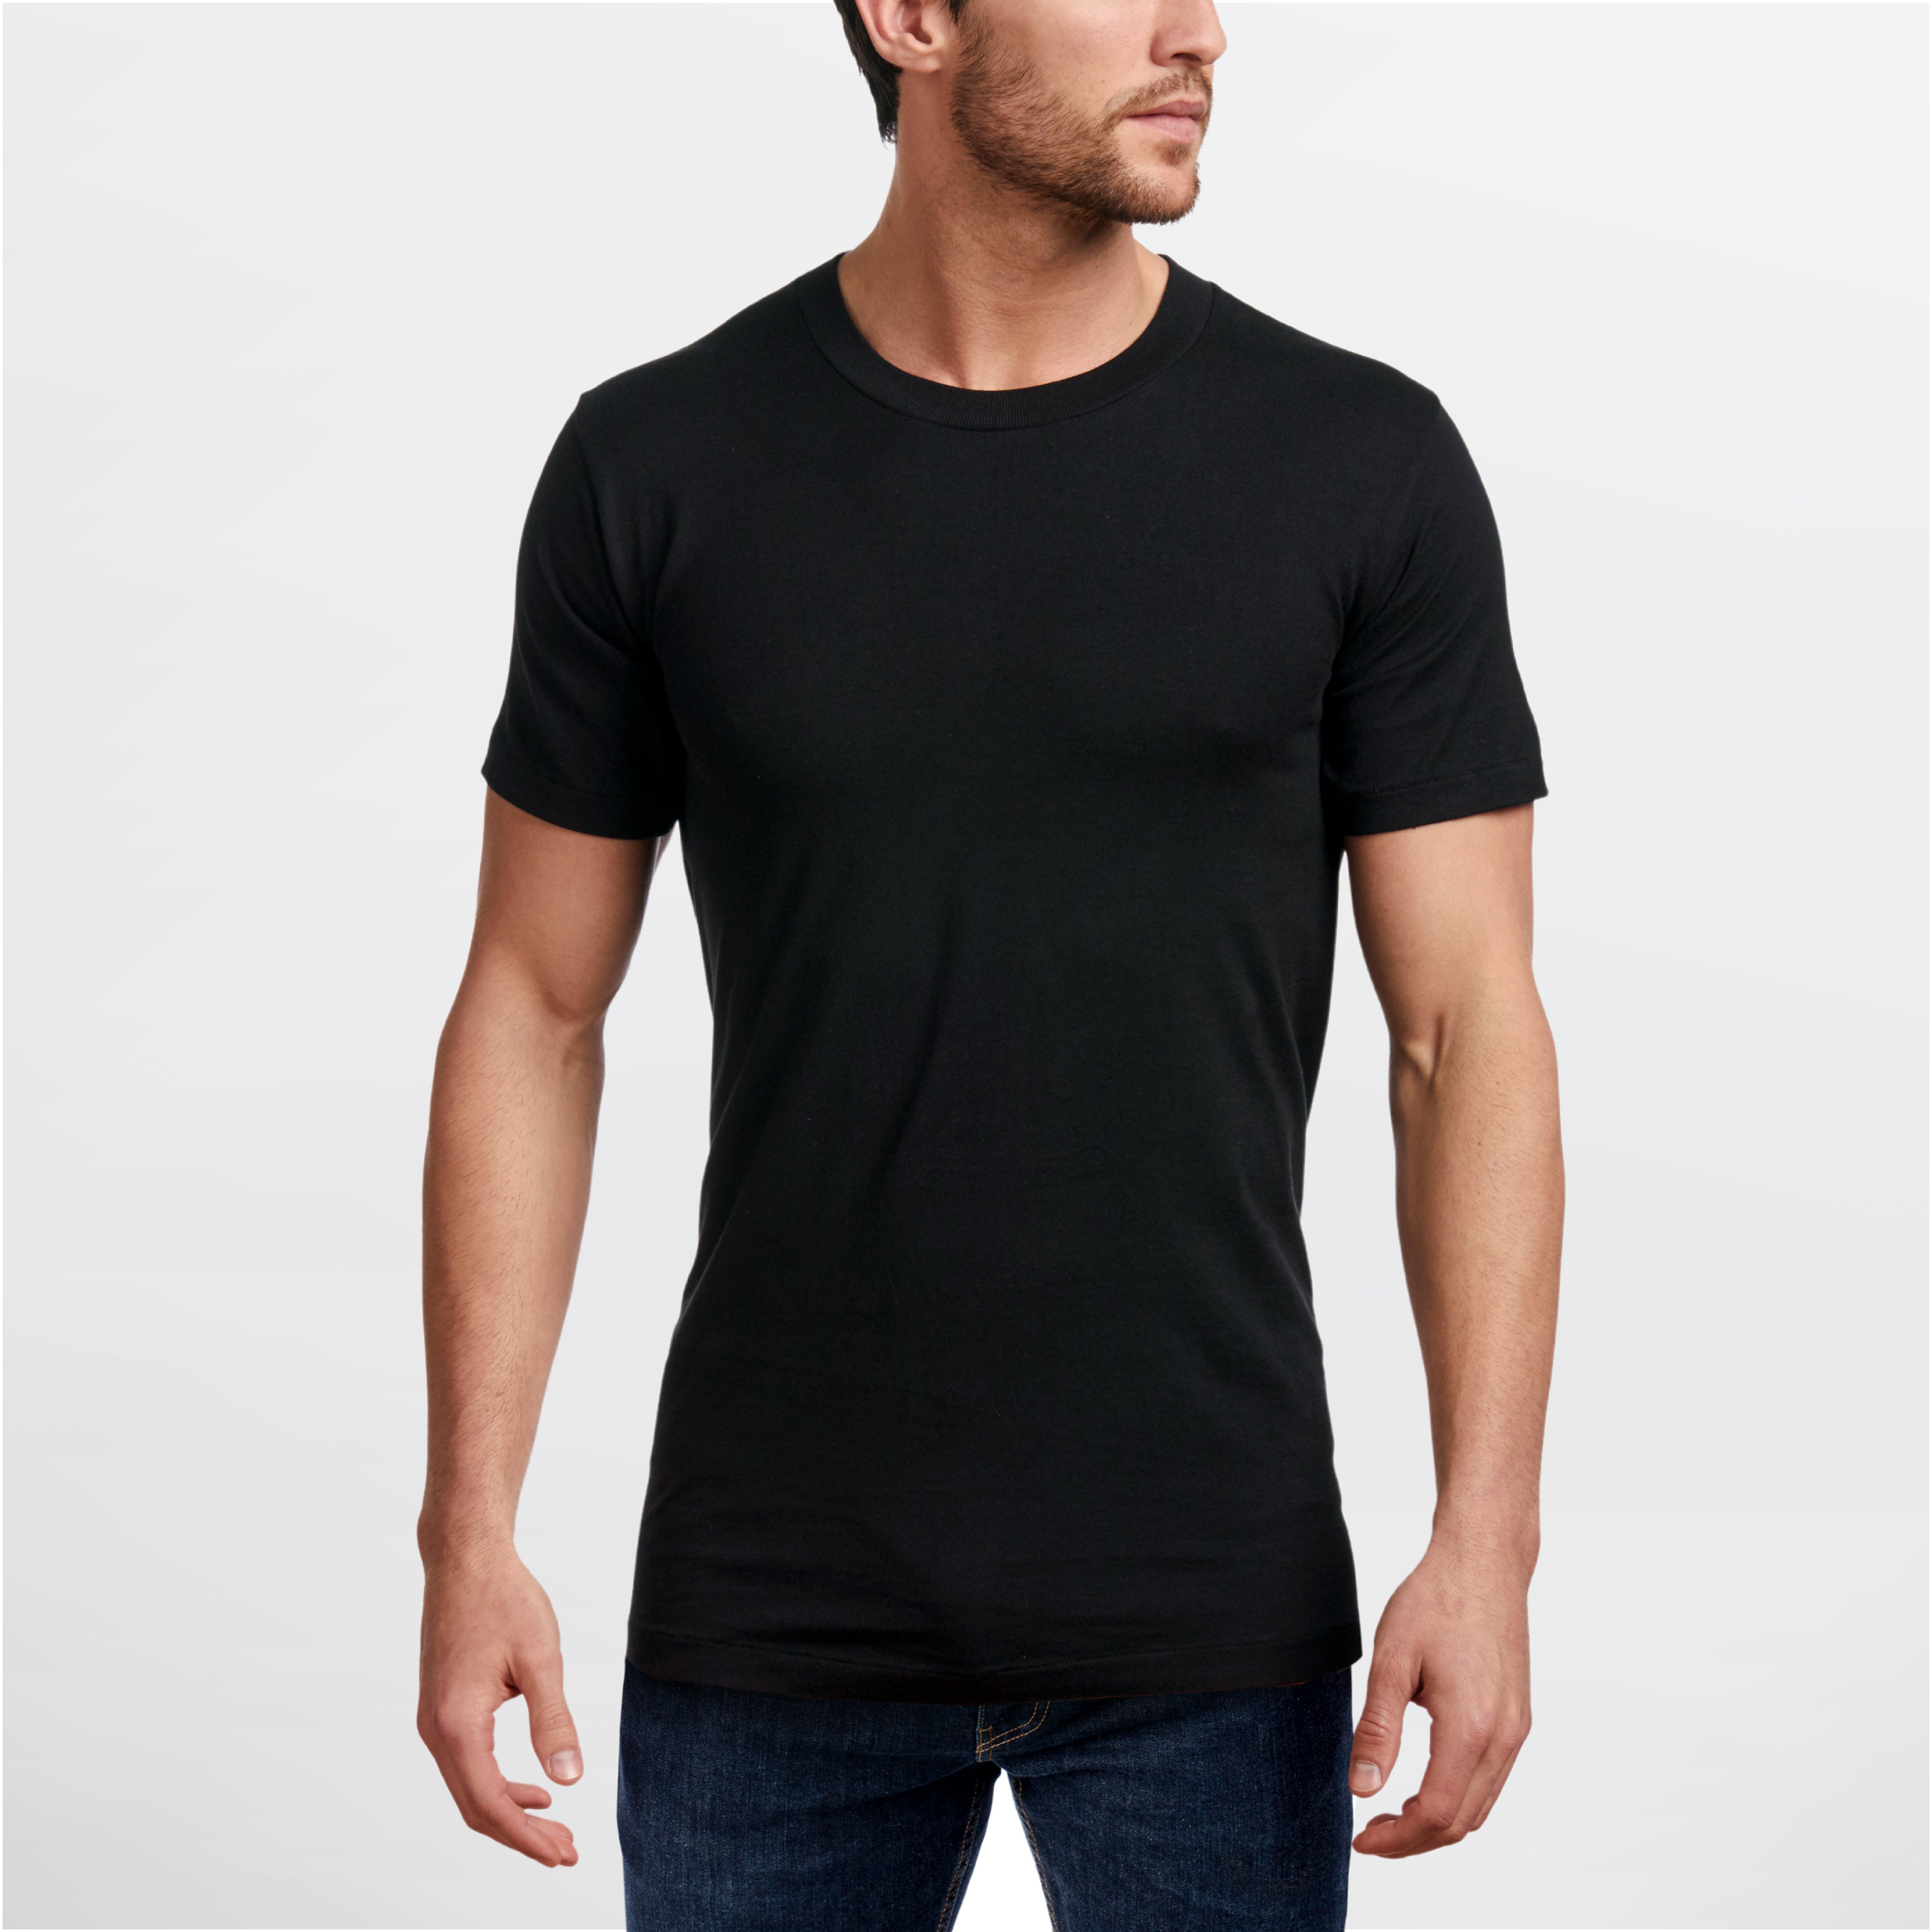 Camisetas premium de cuello redondo para hombre - Pack de 2 negras